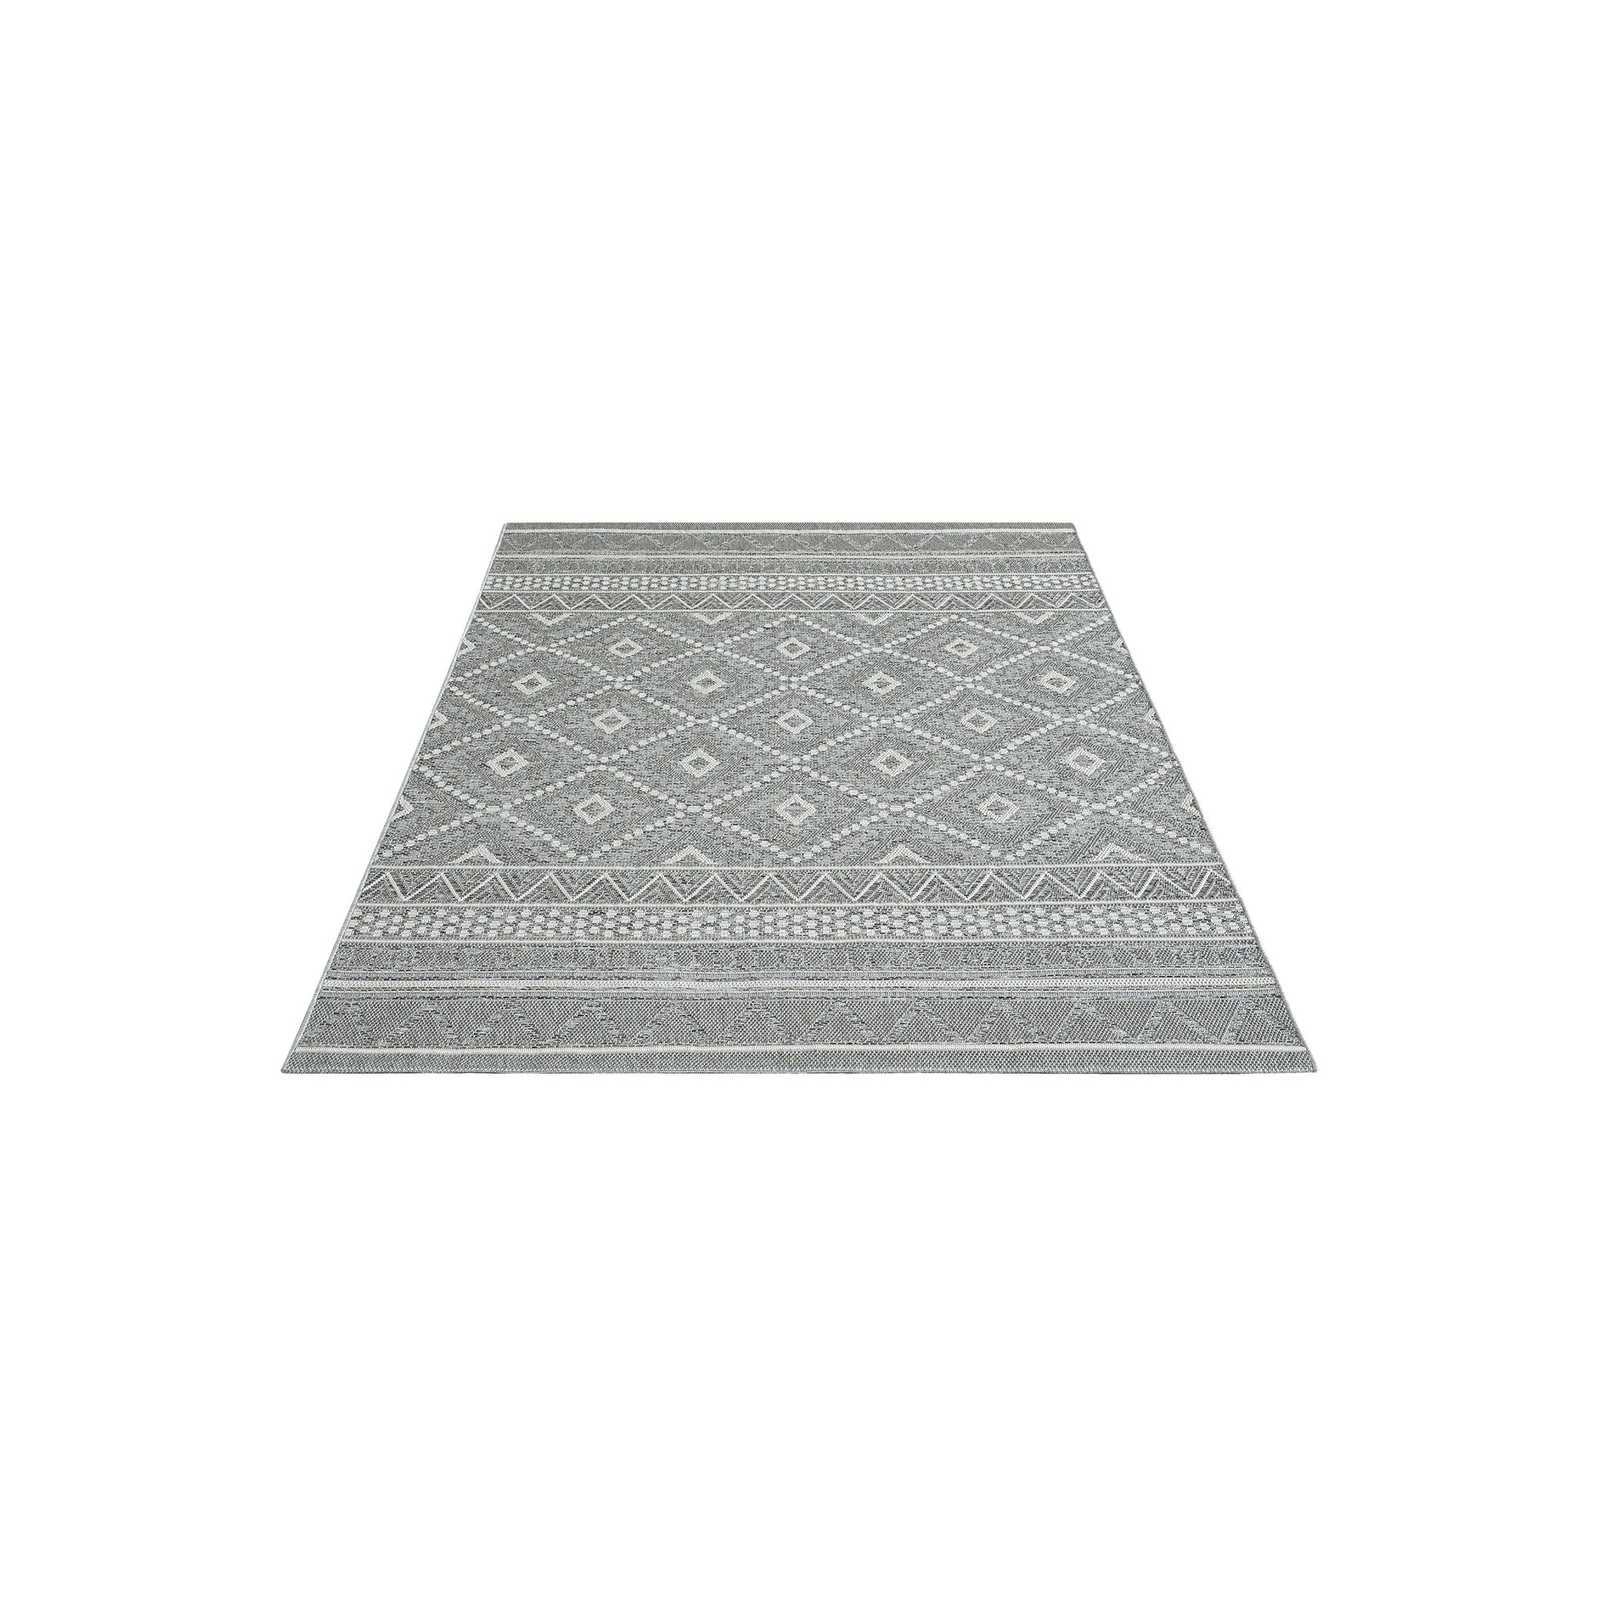 Bemusterter Outdoor Teppich in Grau – 150 x 80 cm
